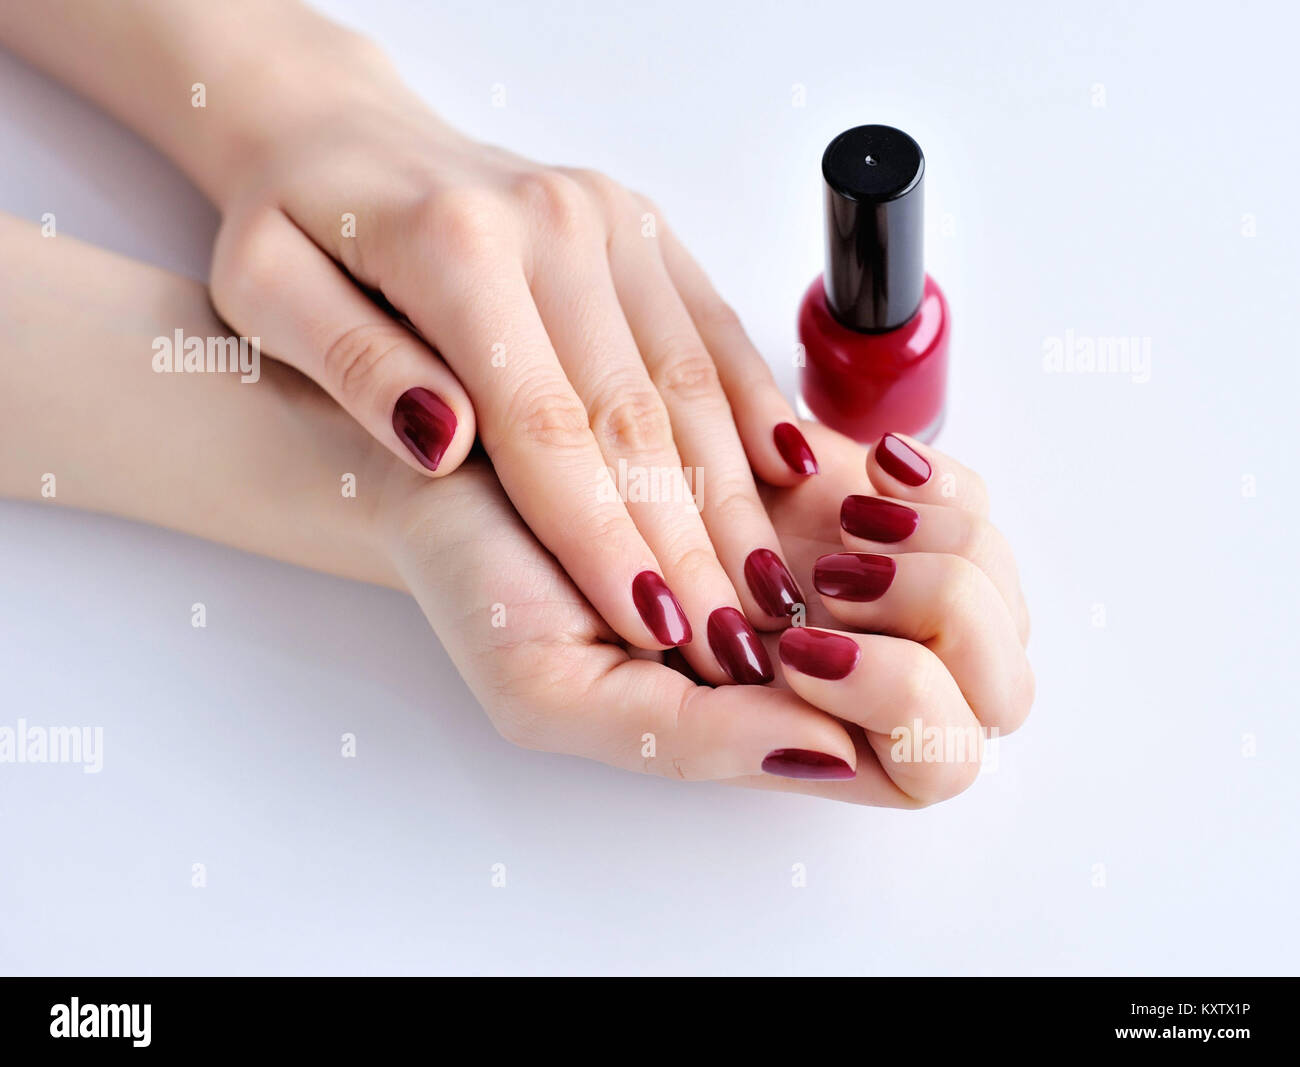 Dark Red Nail Polish Glitter Stock Photo 2219233215 | Shutterstock